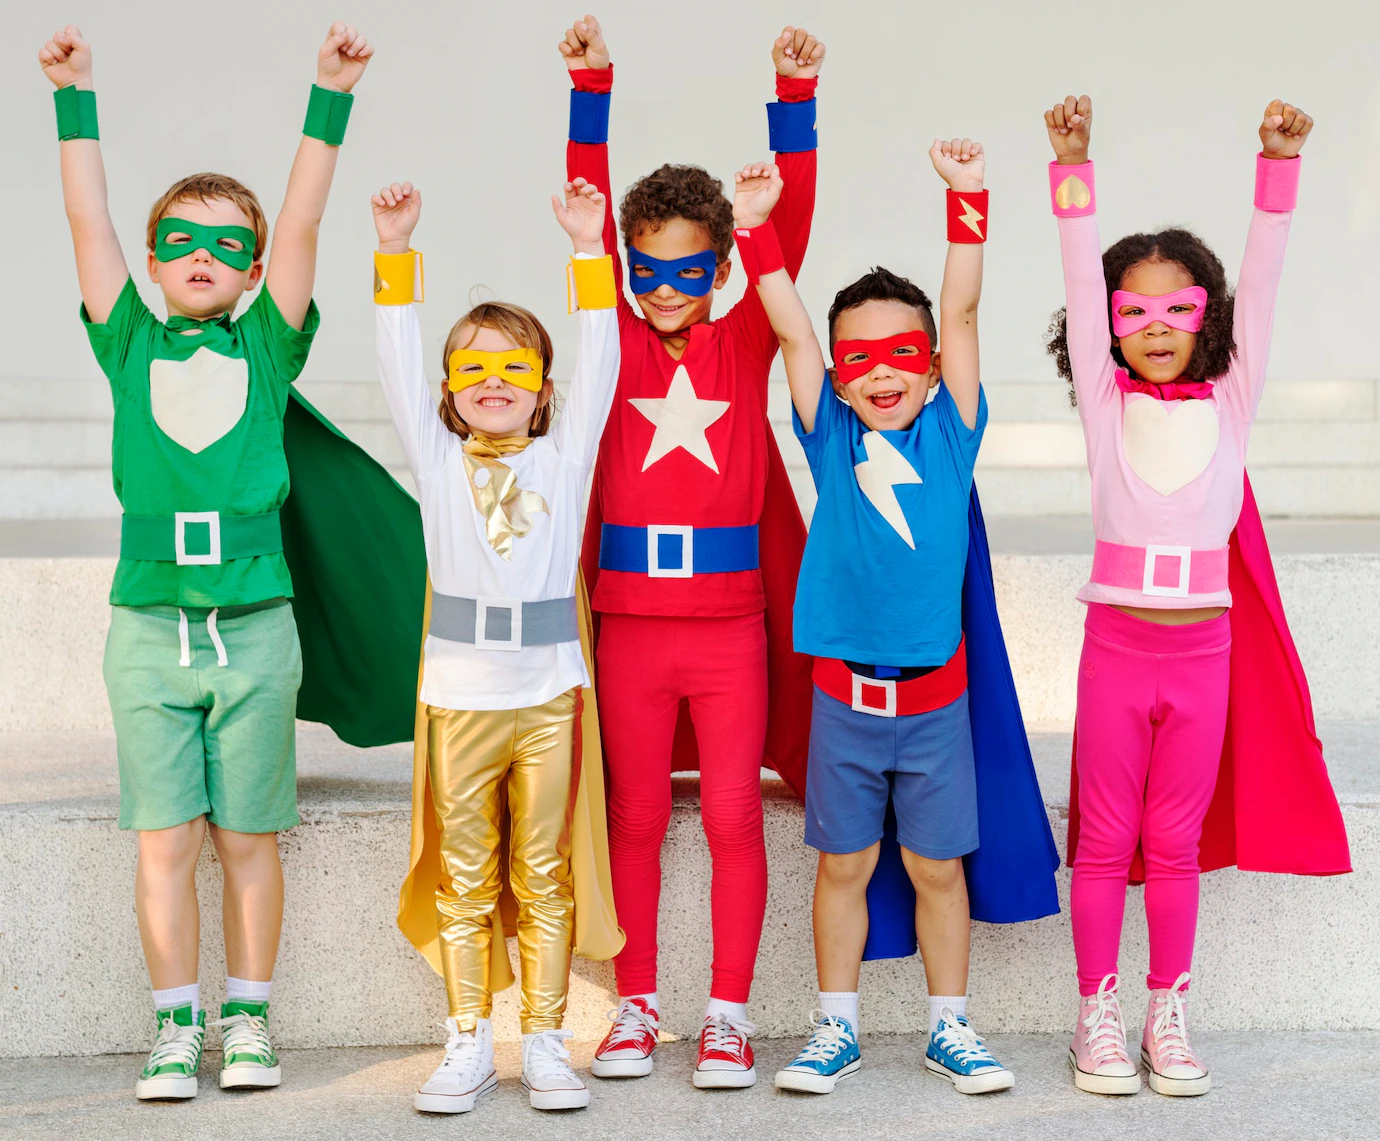 superhero-kids-with-superpowers_53876-138171